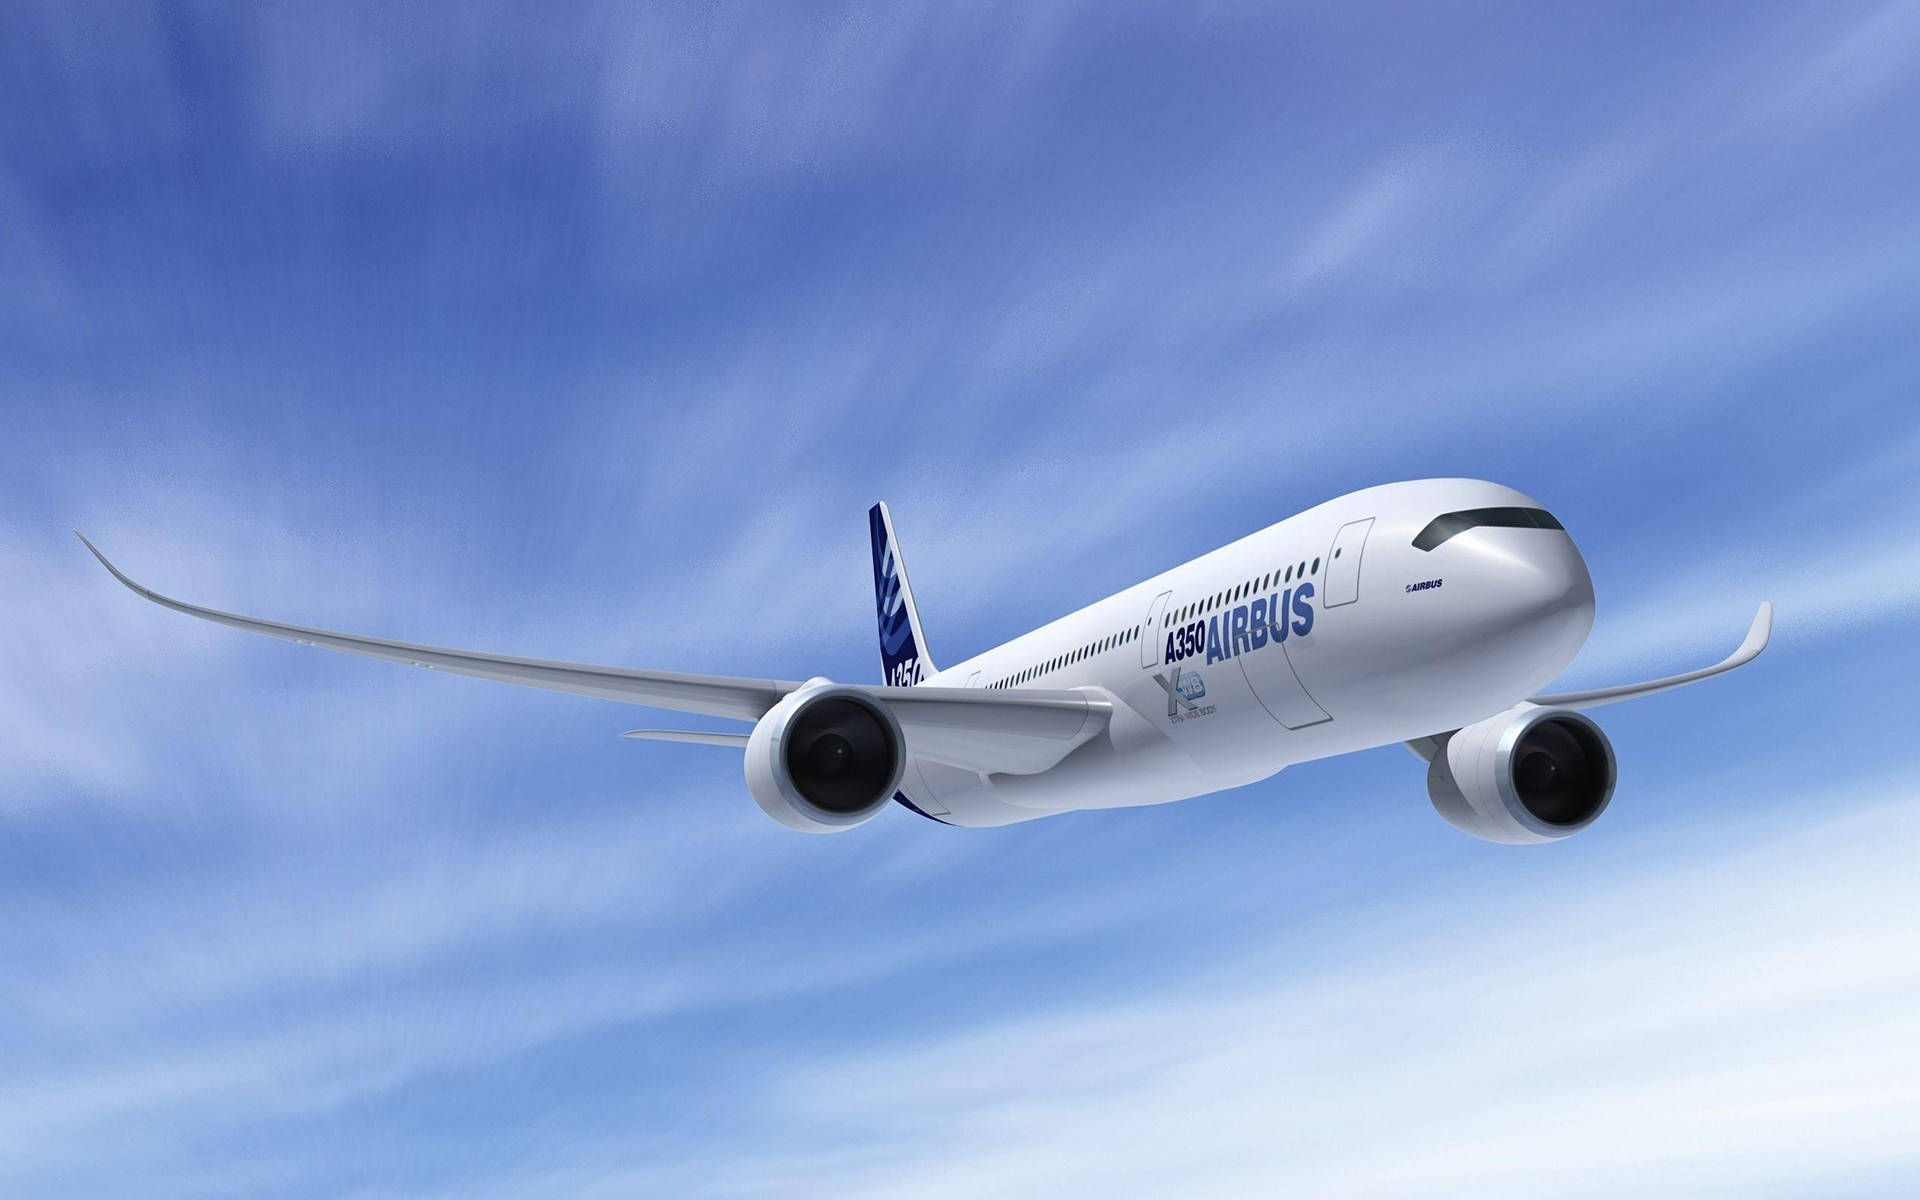 Motion Blur Airbus Hd Plane